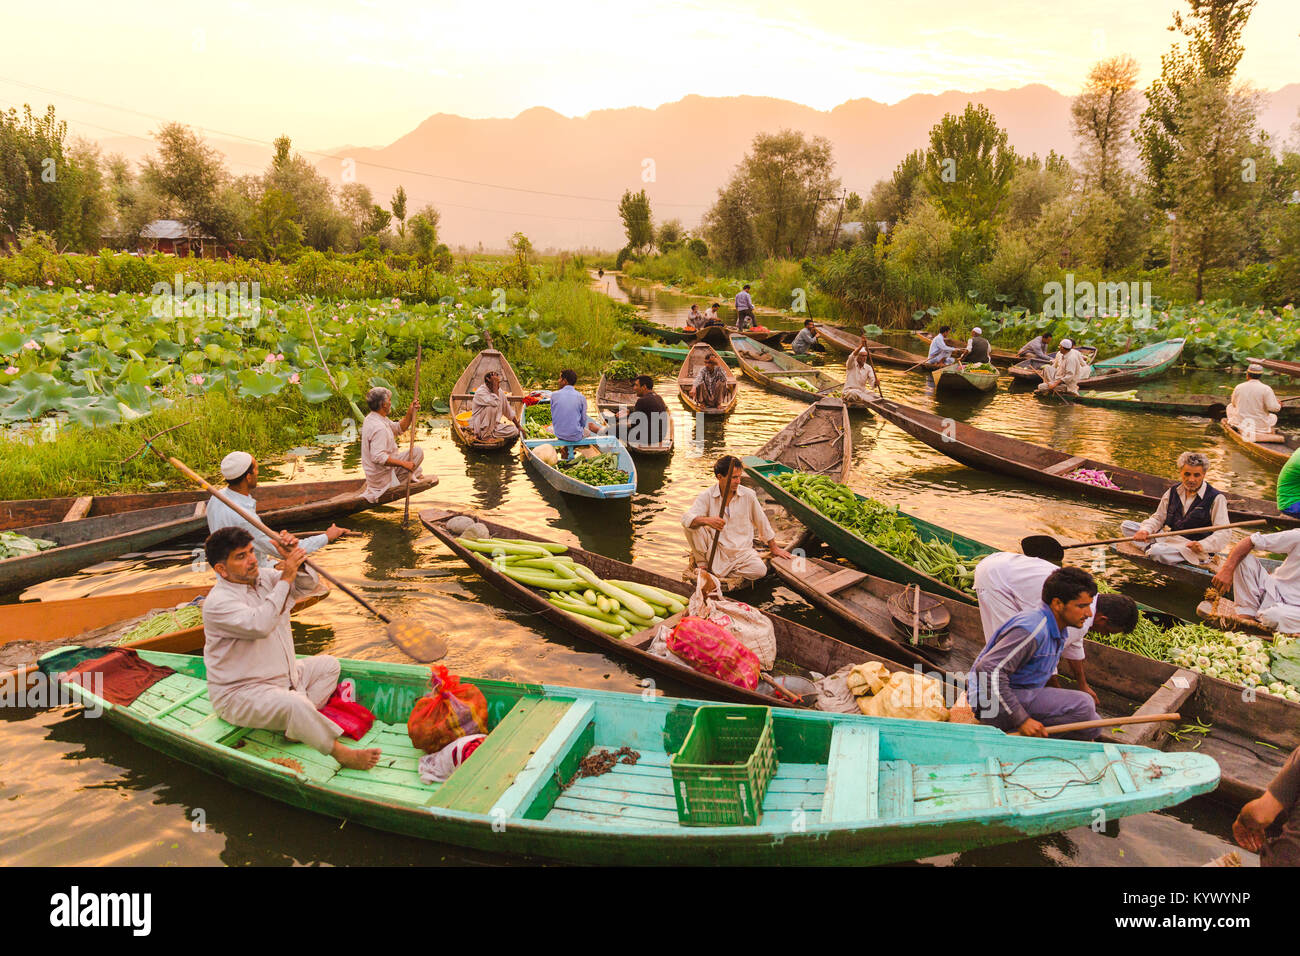 Srinagar, Kashmir - 10. August 2017: Kaschmir Bauern Handel ihre Home Produkte am Morgen Gemüsemarkt am inneren Dal Lake gewachsen, Kaschmir Stockfoto